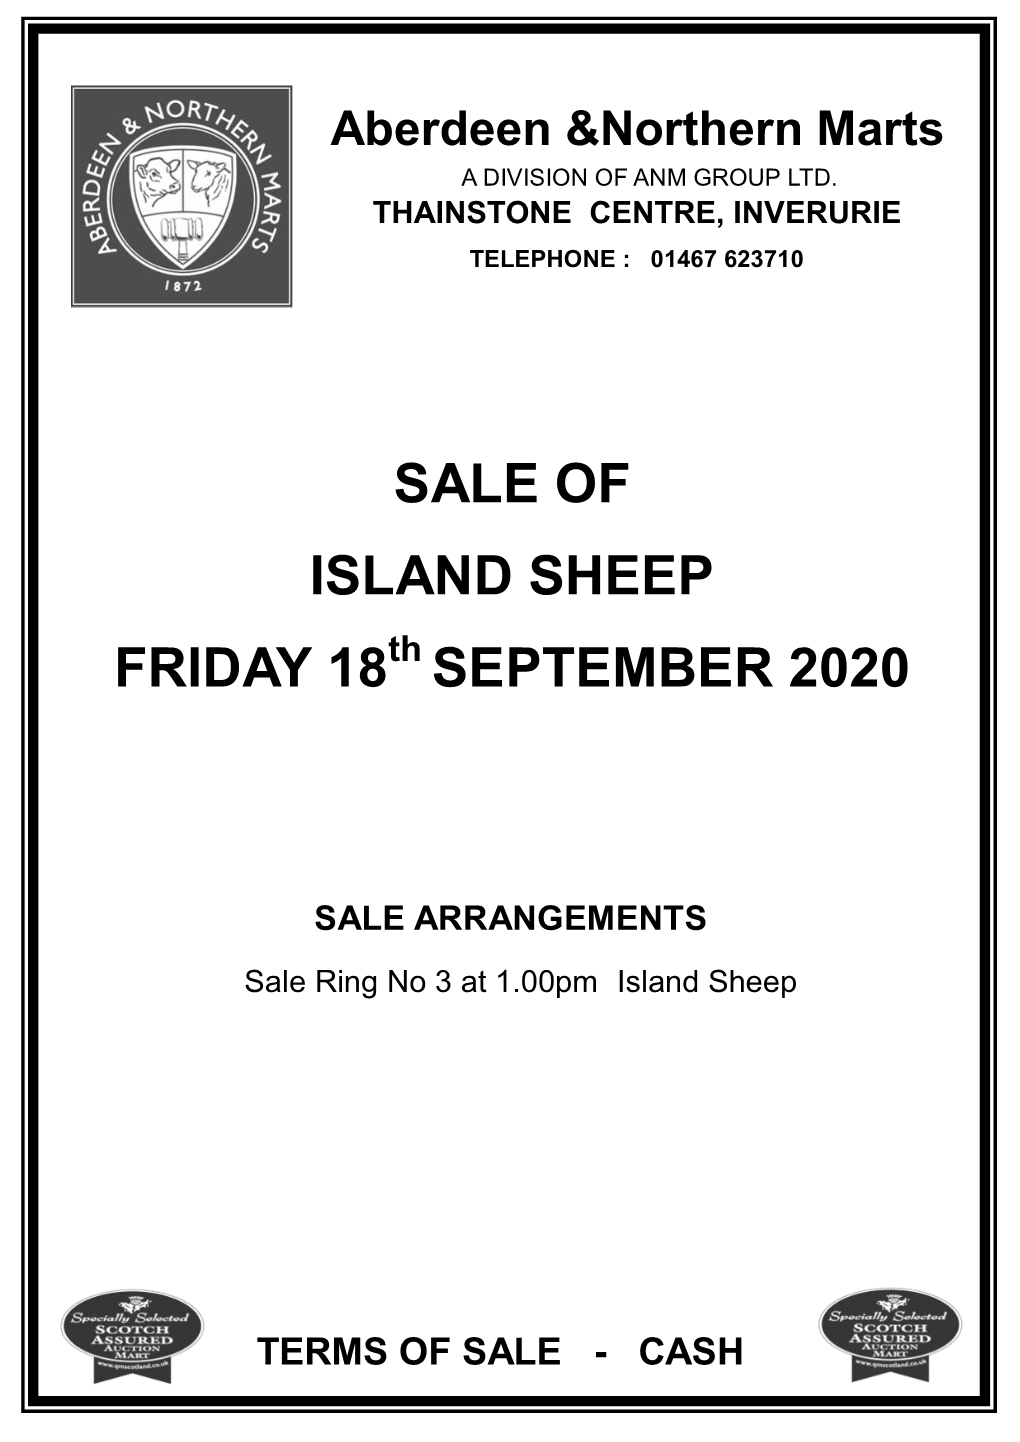 Sale of Island Sheep Friday 18 September 2020